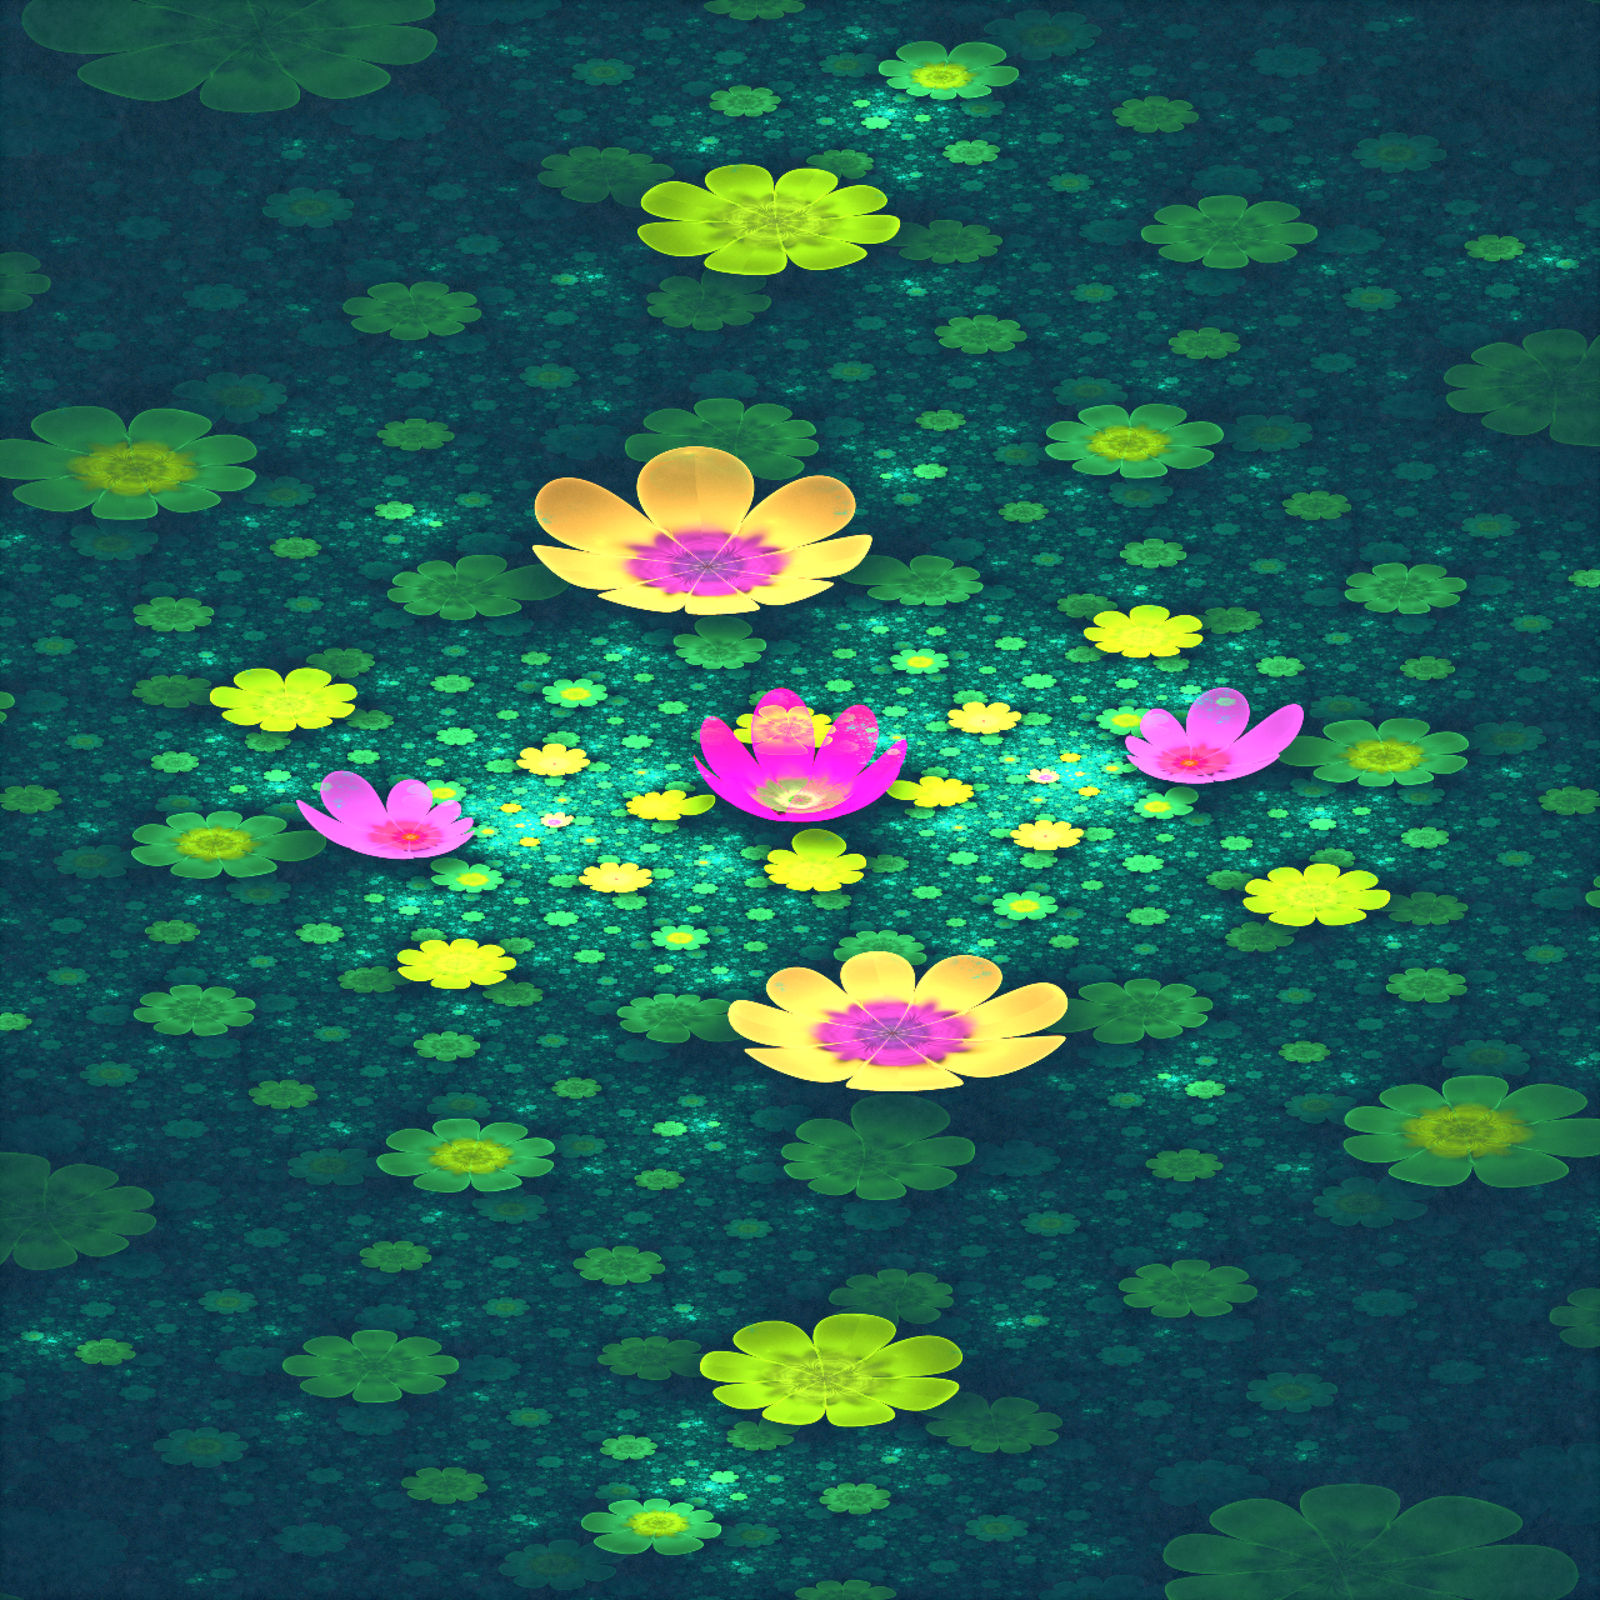 Lotus Pond by Hafapea on DeviantArt